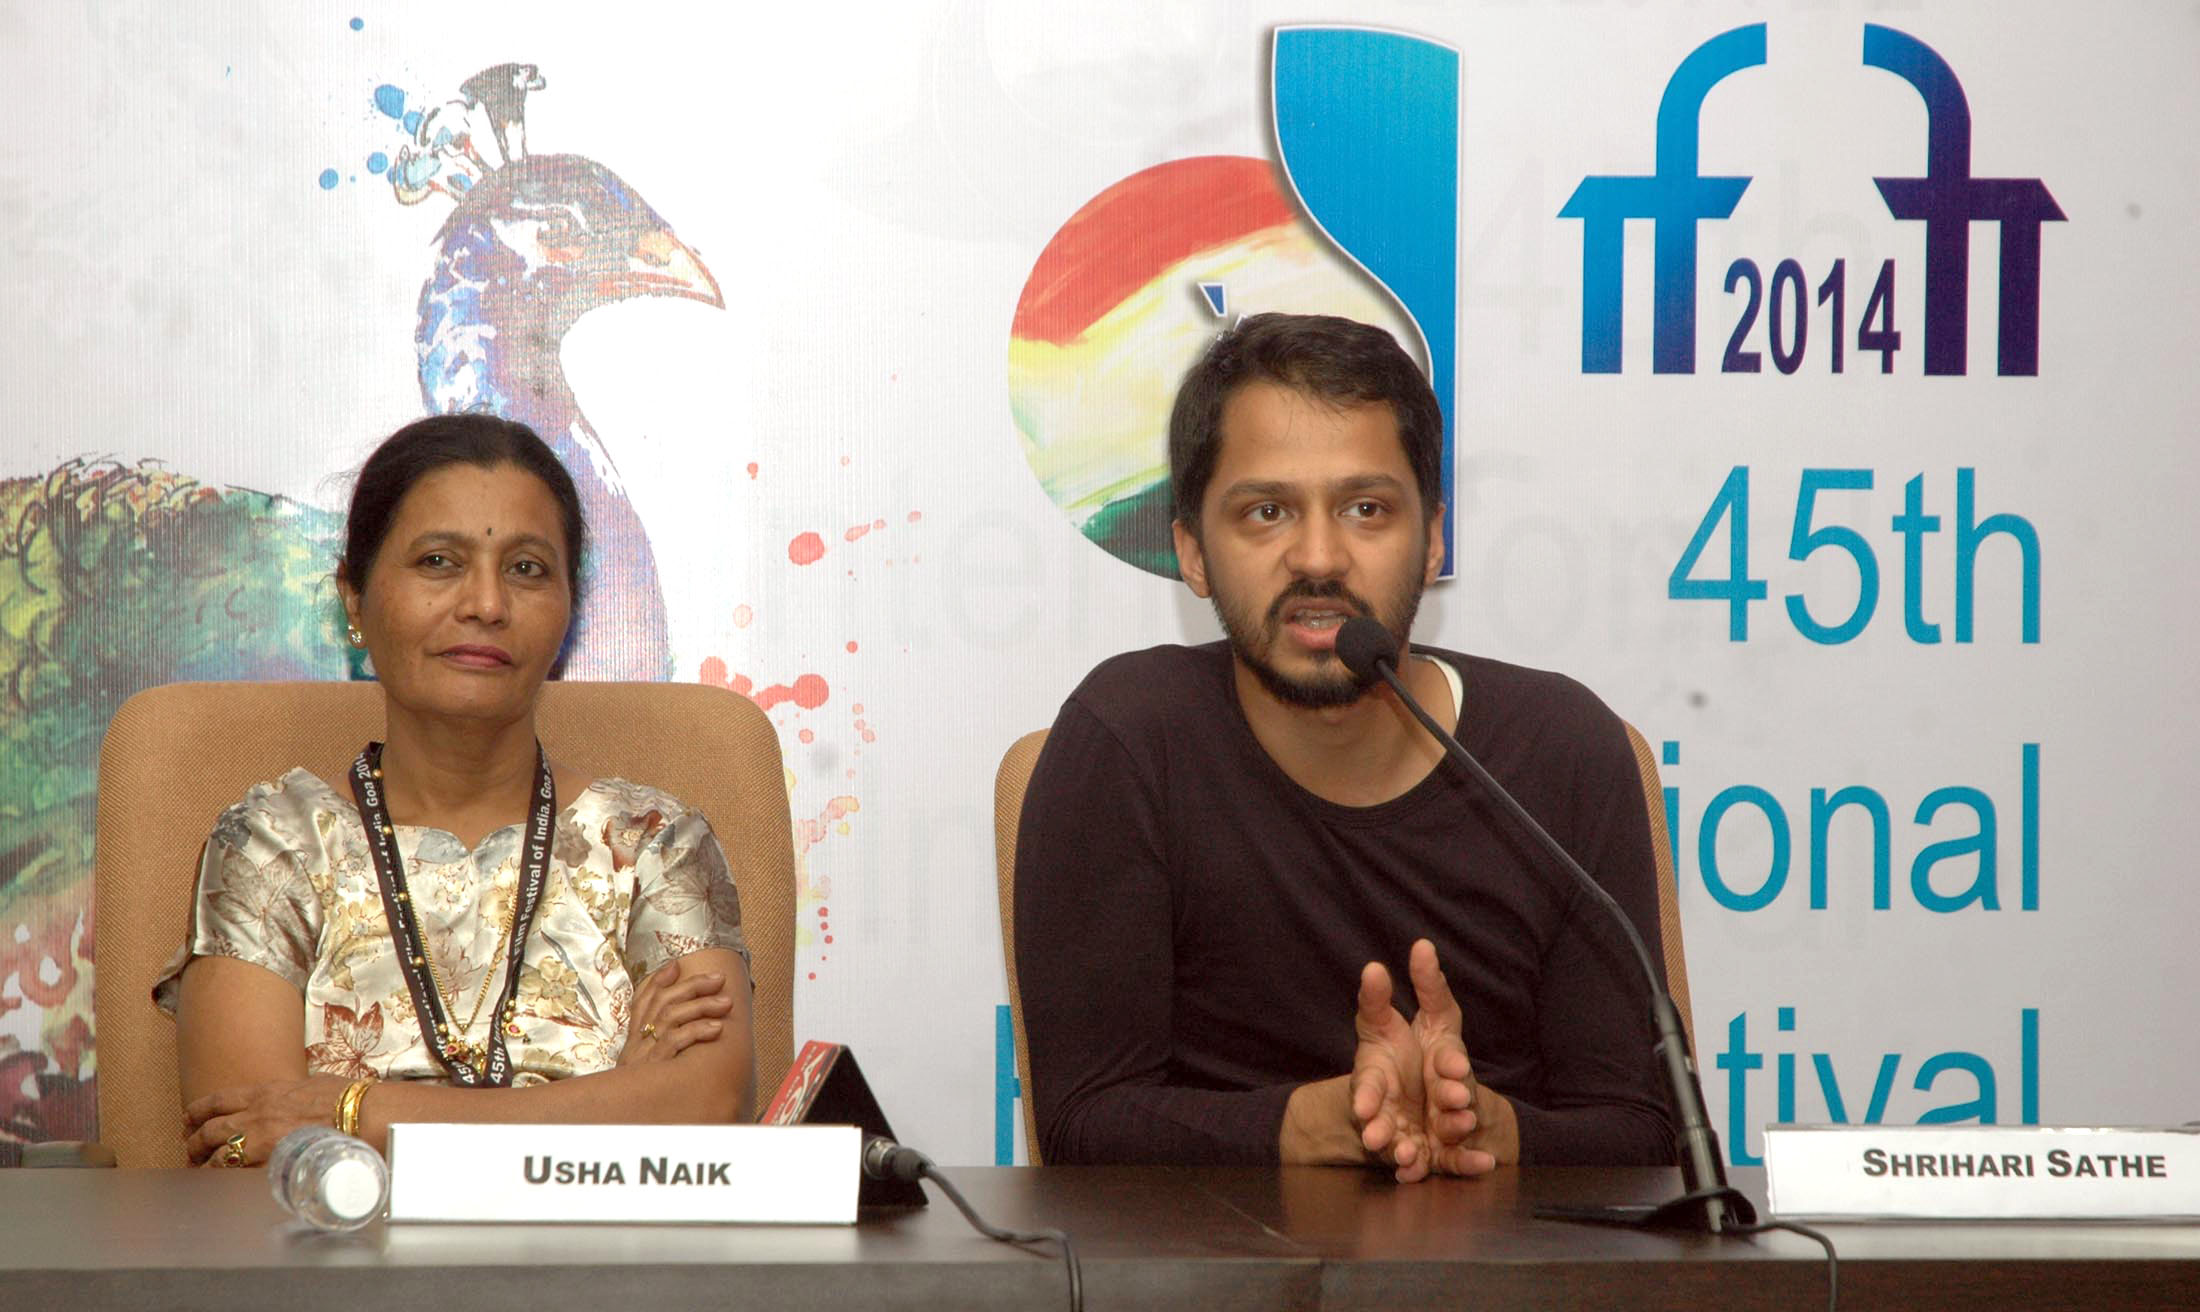 Usha Naik, Actor and Shrihari Sathe, Producer of the film 'EK HAZARACHI', at a press conference, at the 45th International Film Festival of India (IFFI-2014), in Panaji, Goa on November 29, 2014.jpg